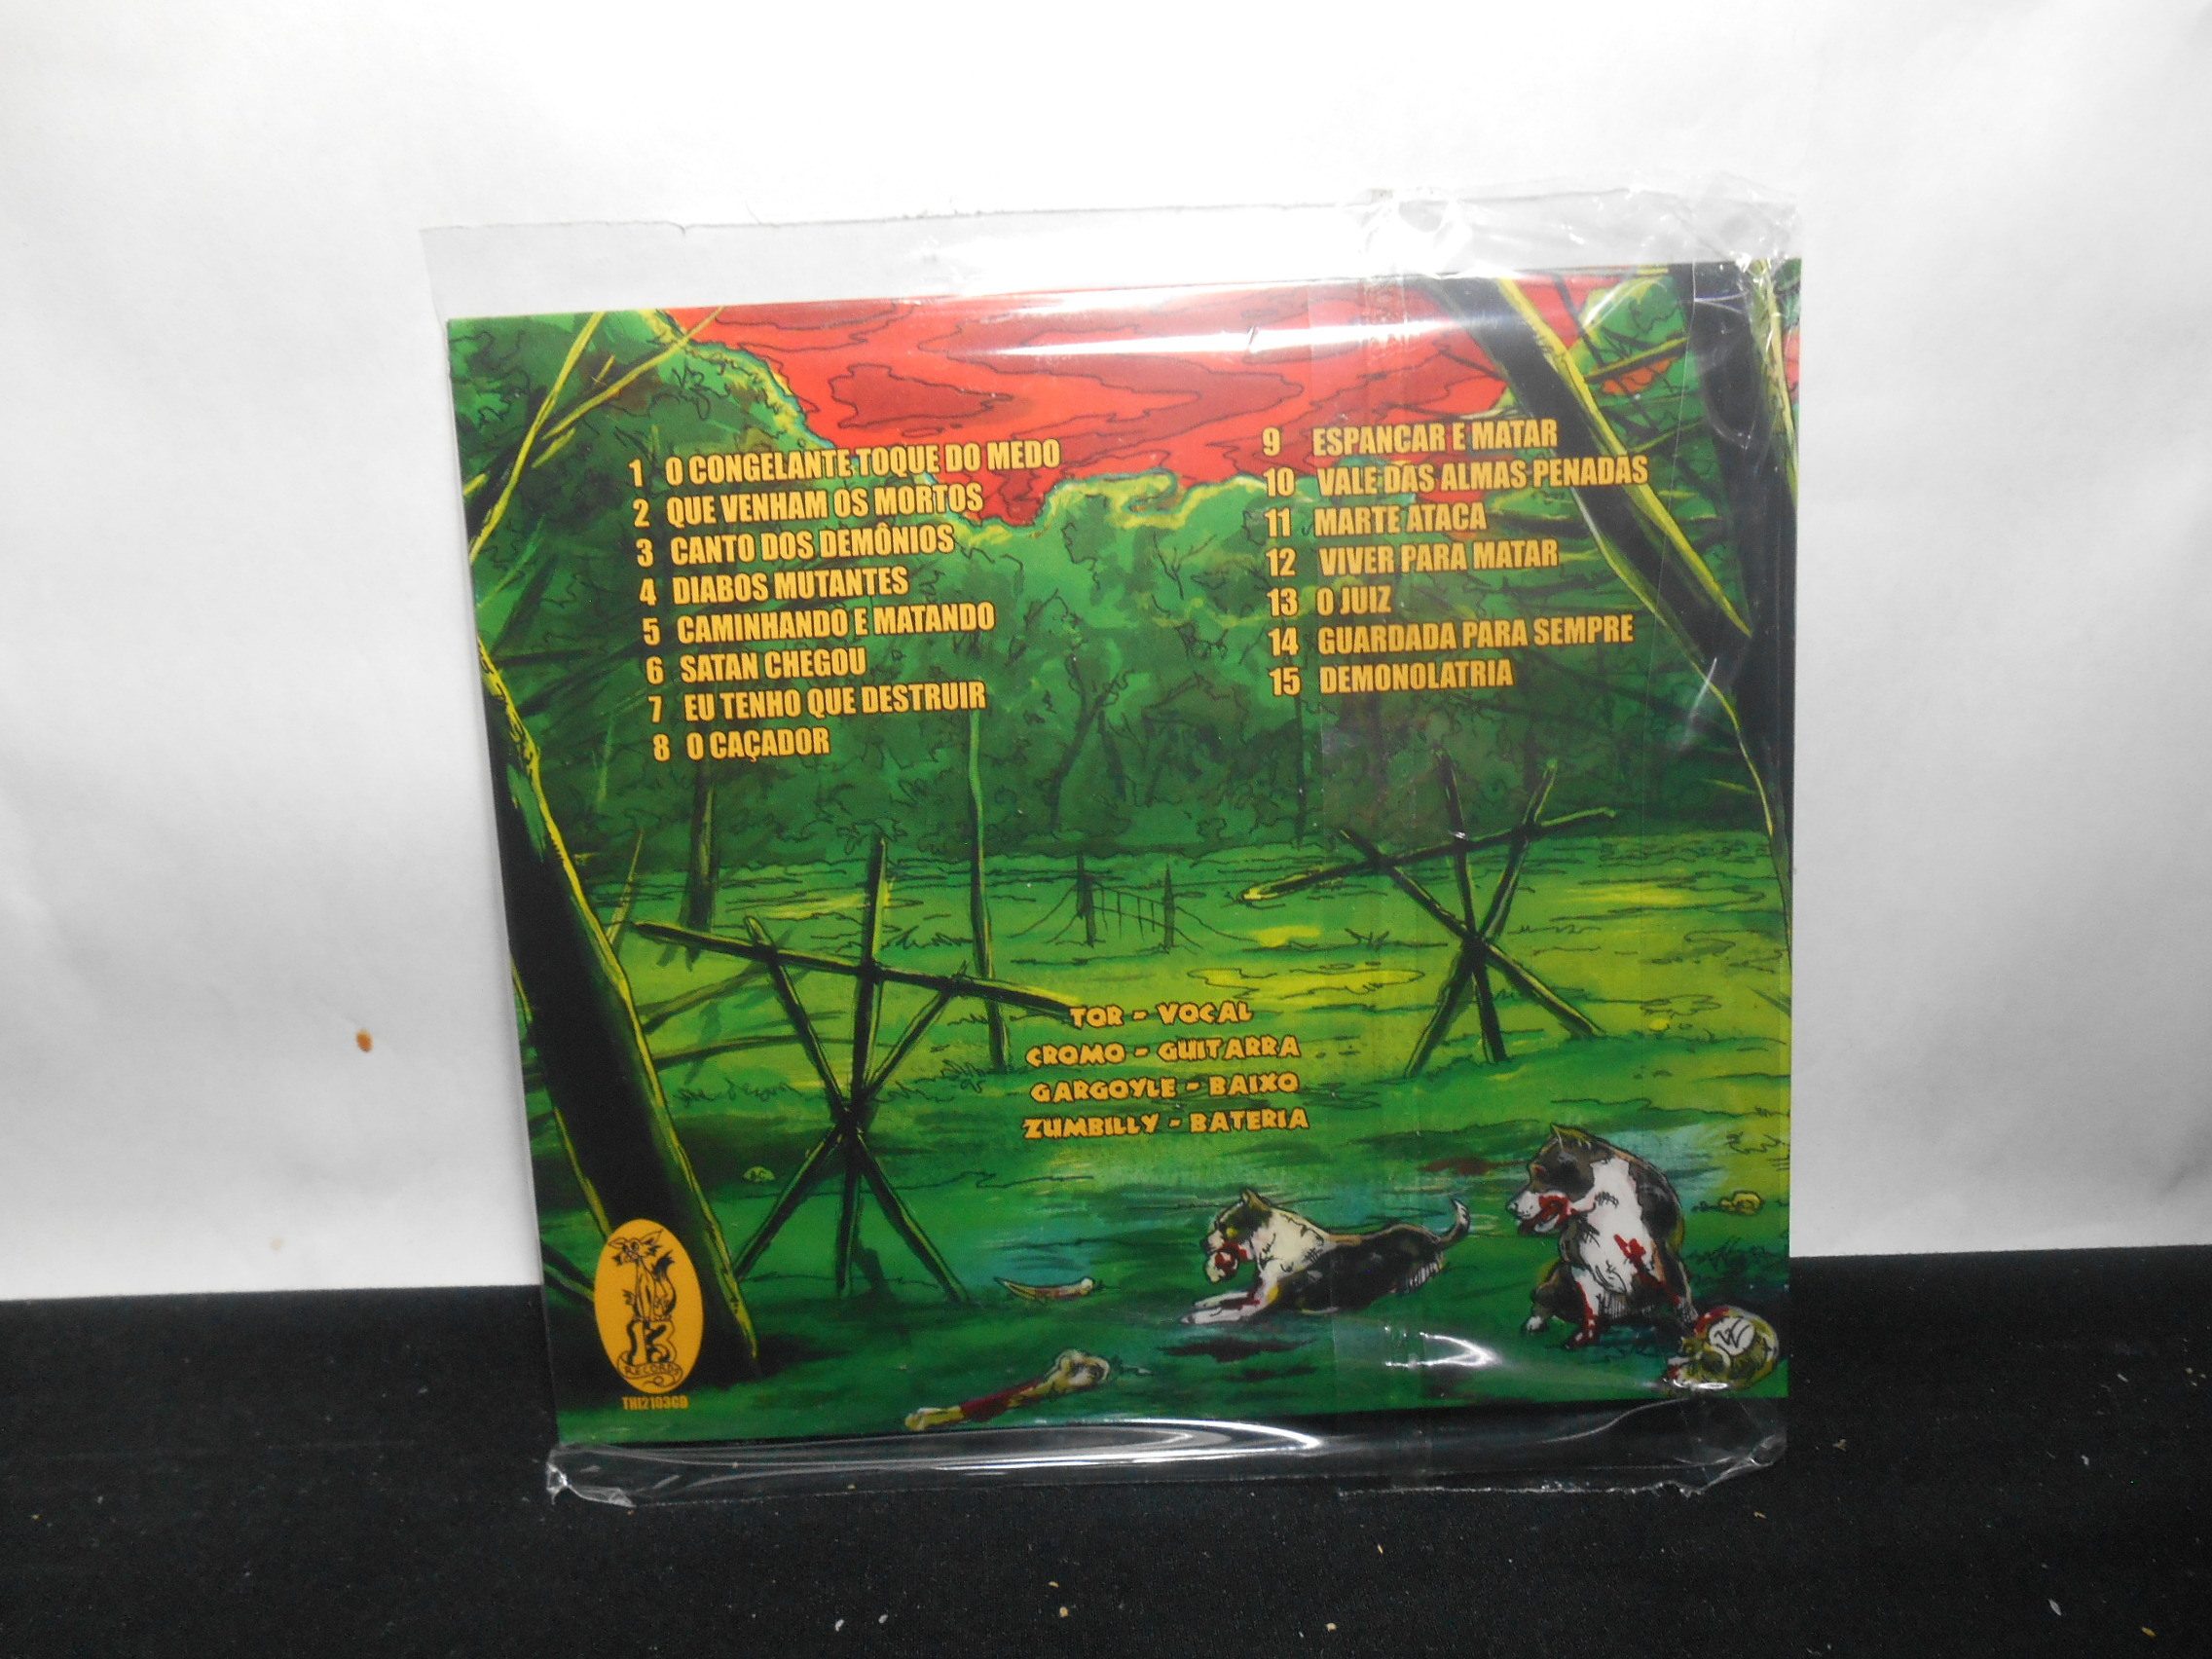 CD - Zumbis do Espaco - Abominável Mundo Monstro (Lacrado/Paper Sleeve)